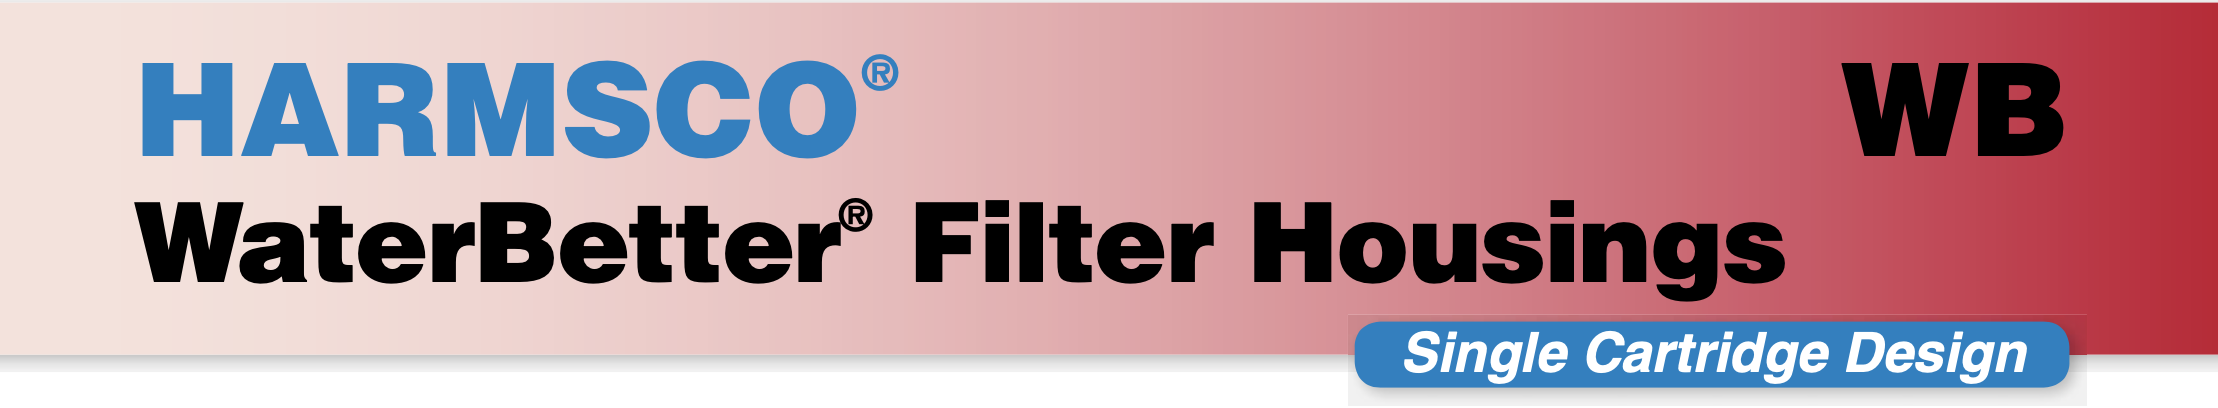 Harmsco Filter Housing